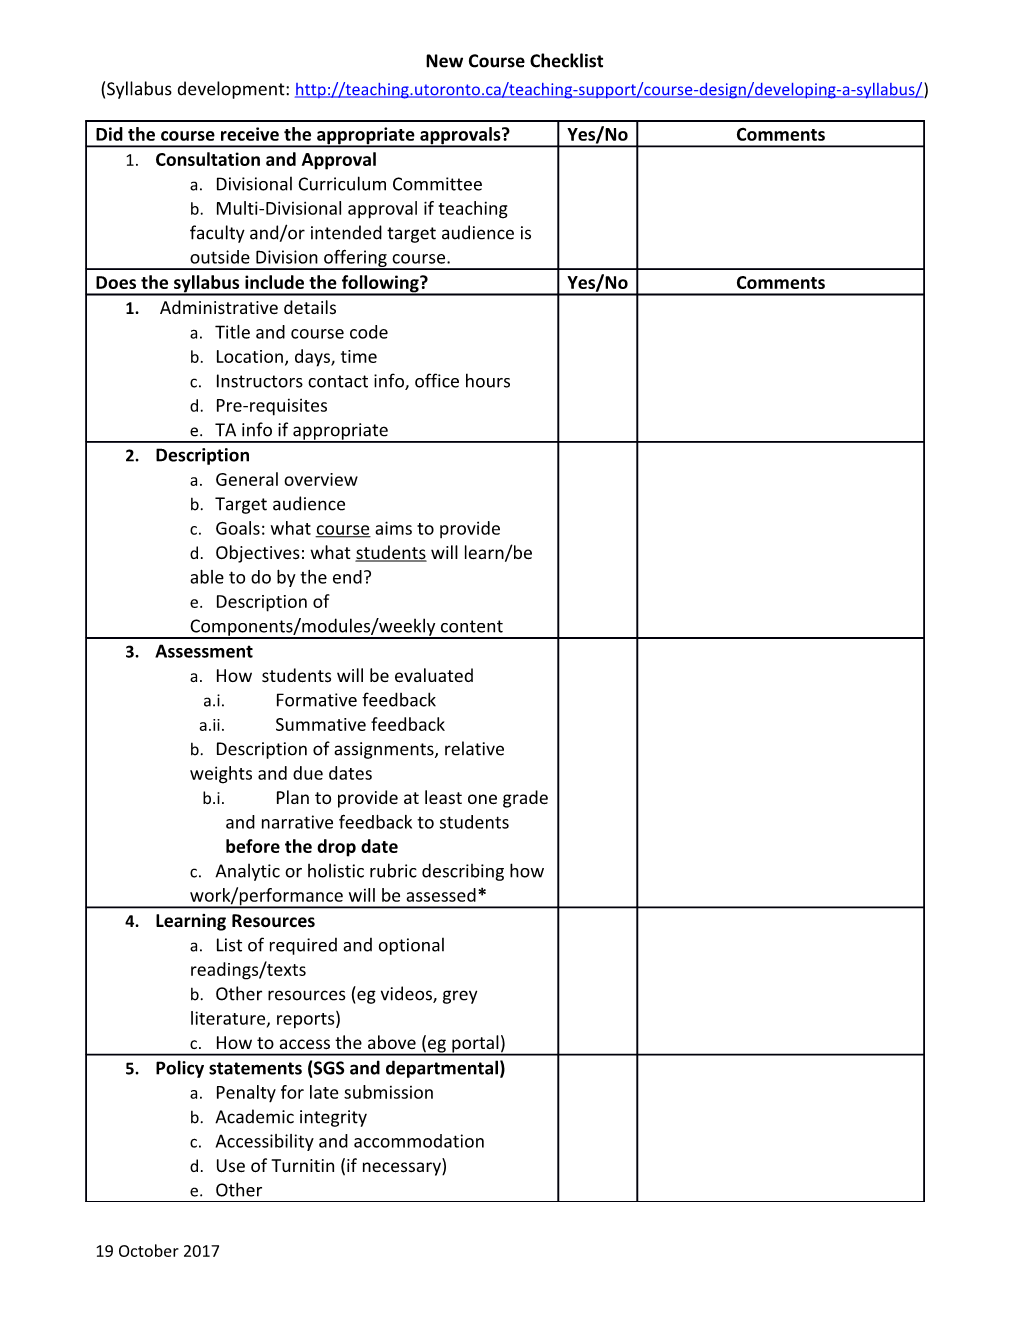 New Course Checklist (Syllabus Development